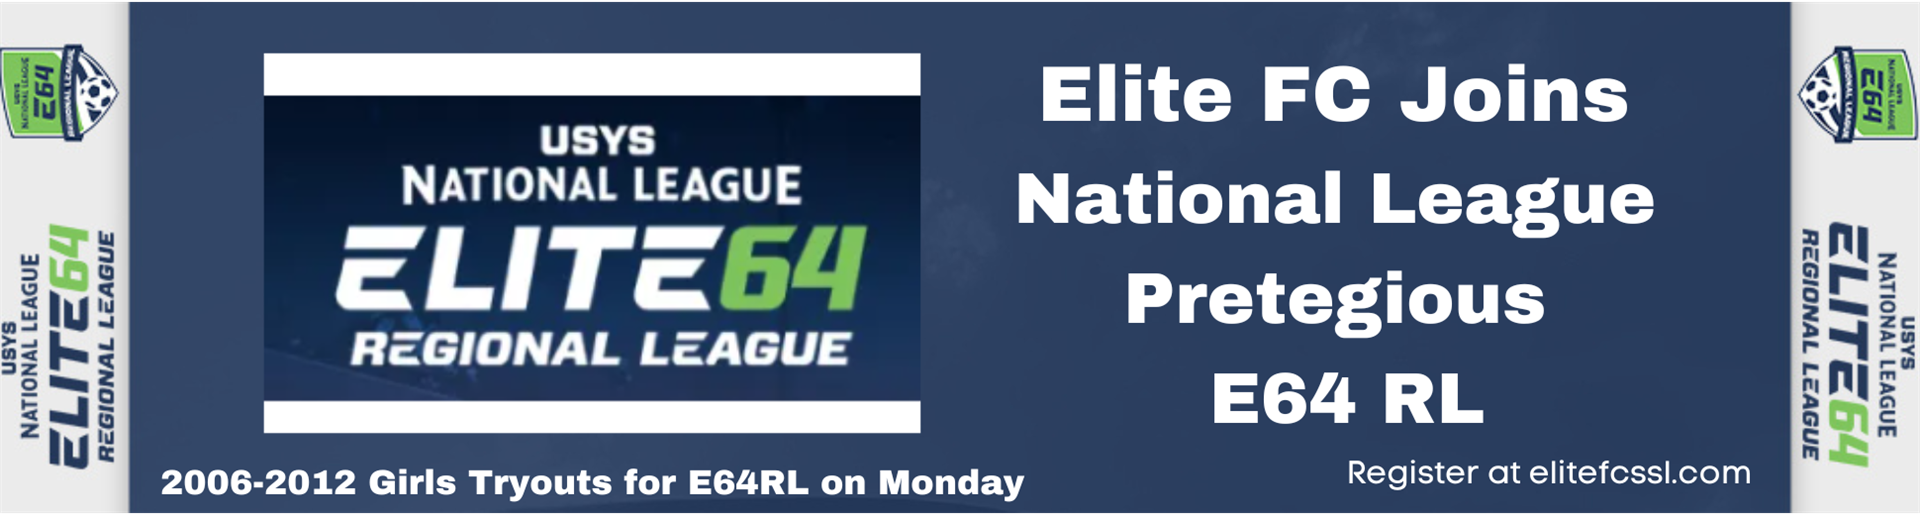 Elite 64 Regional League Add Elite FC